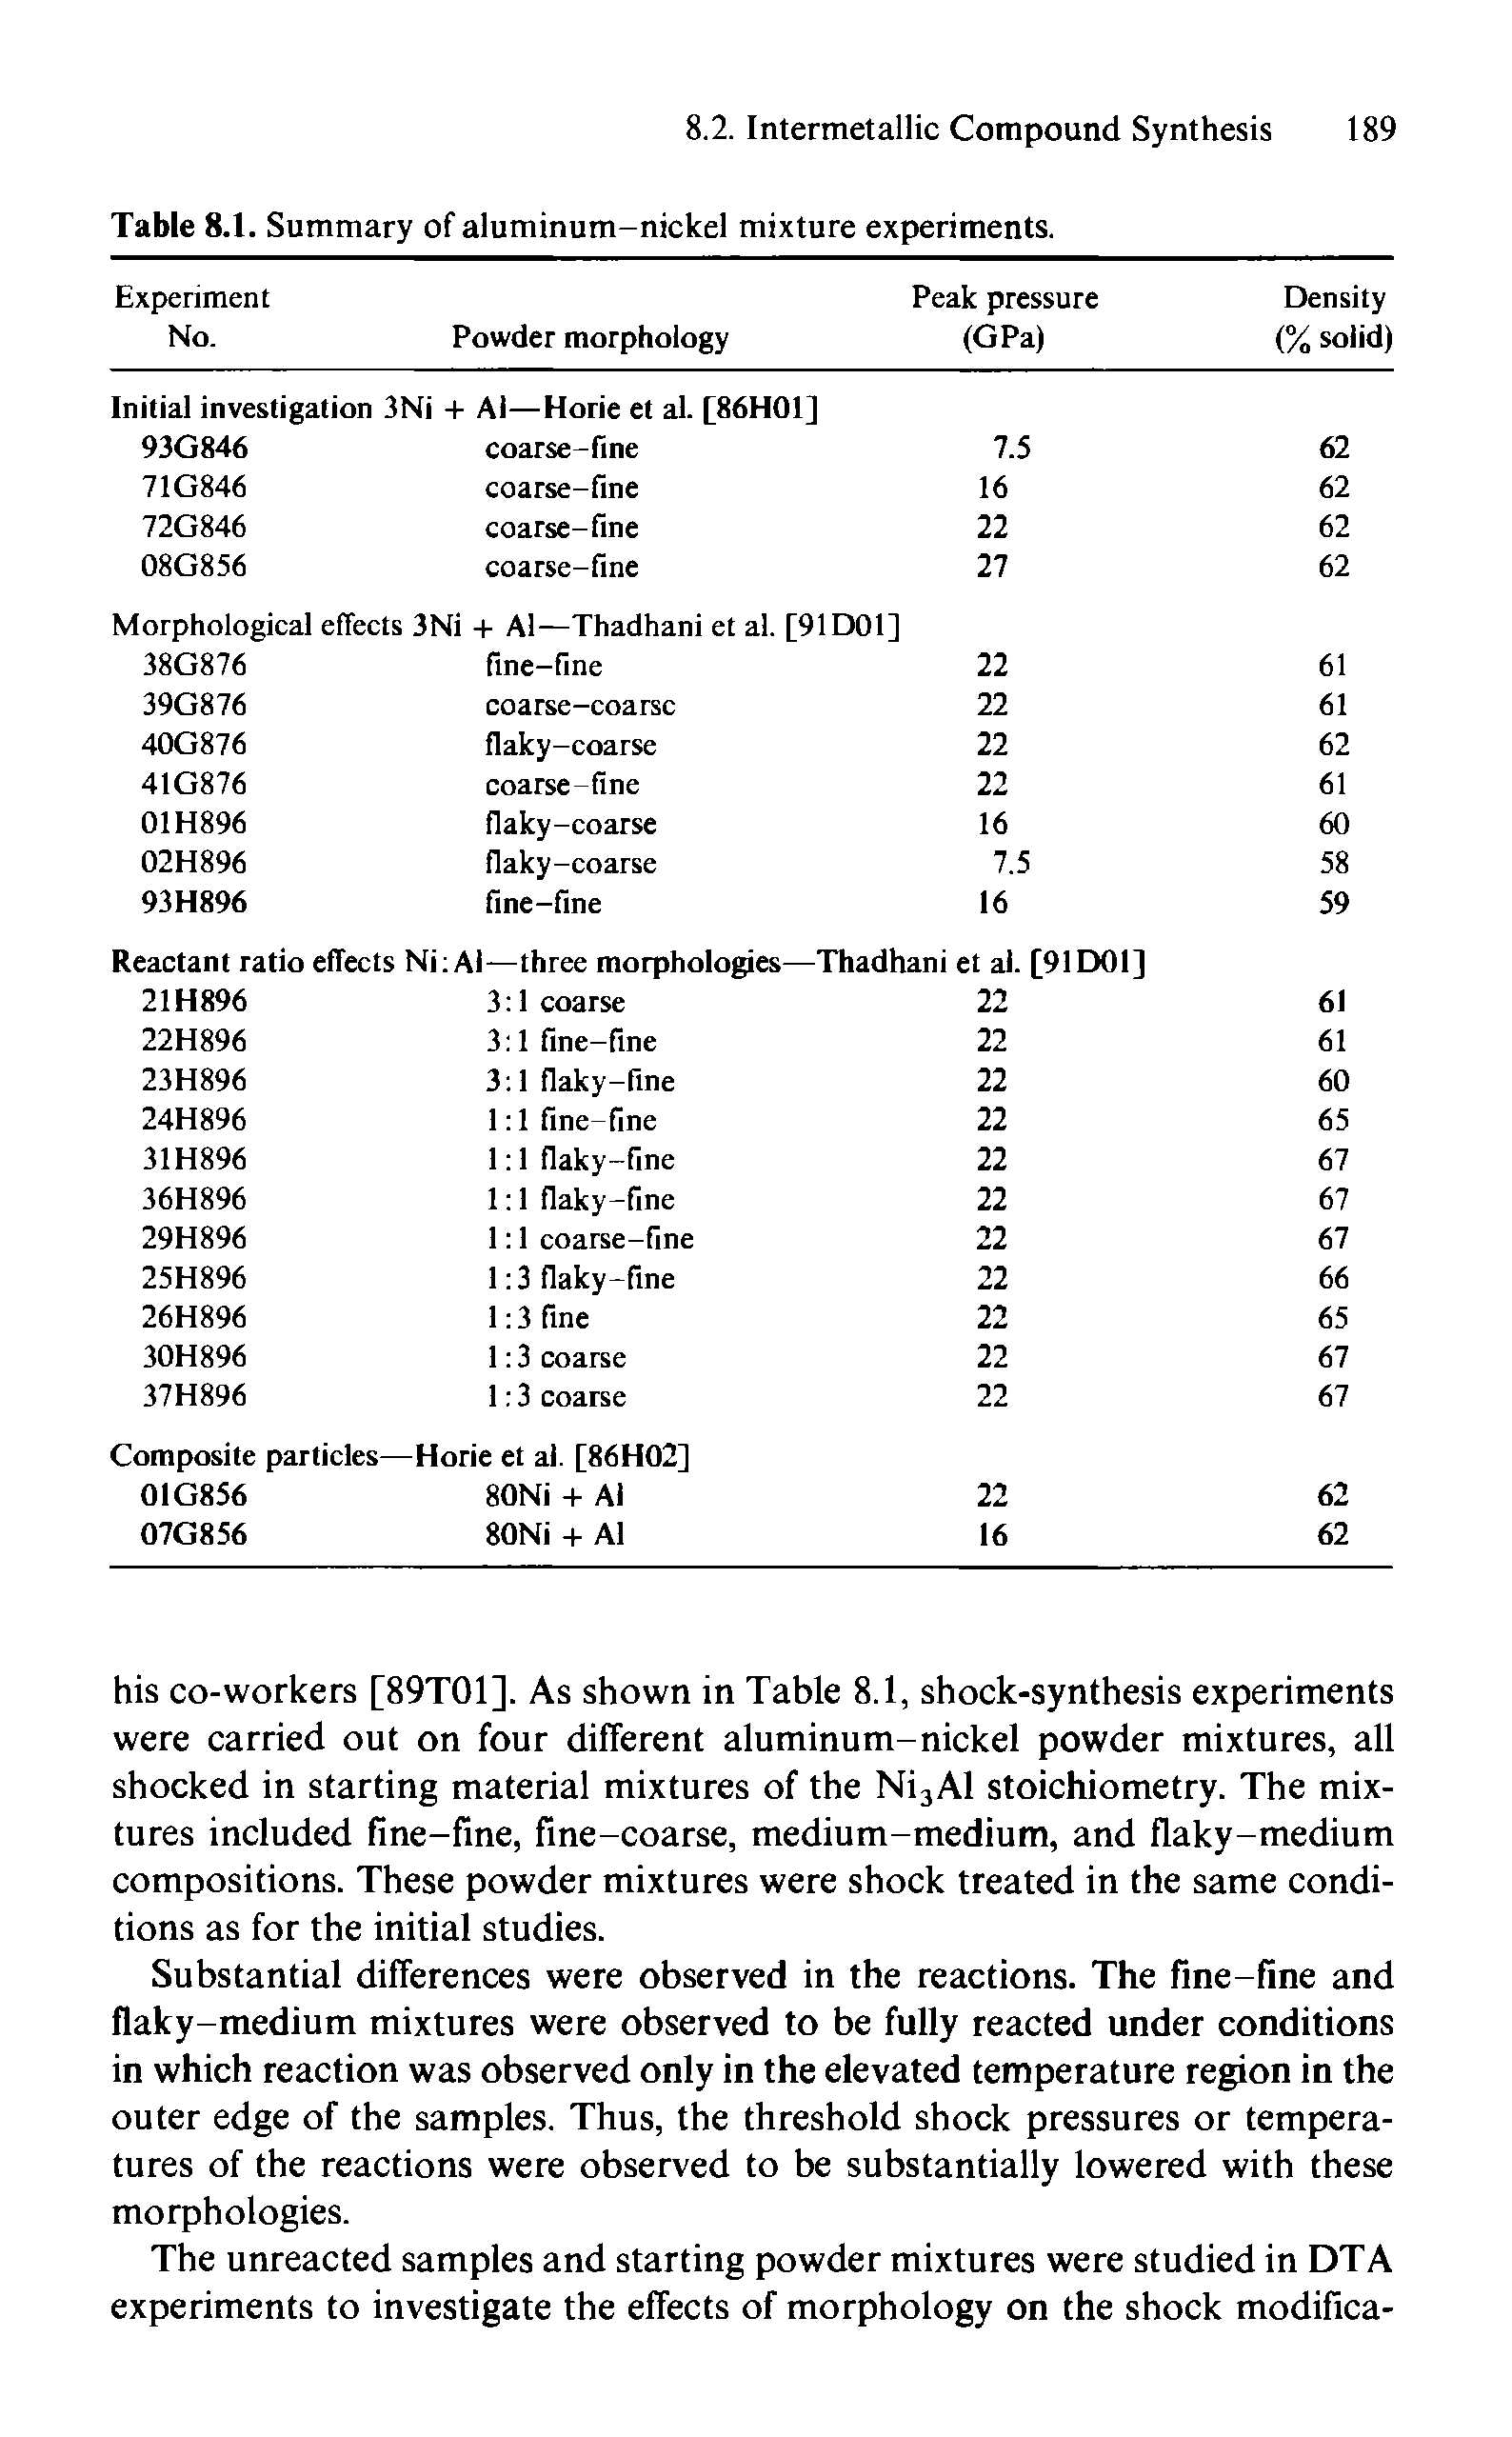 Table 8.1. Summary of aluminum-nickel mixture experiments.